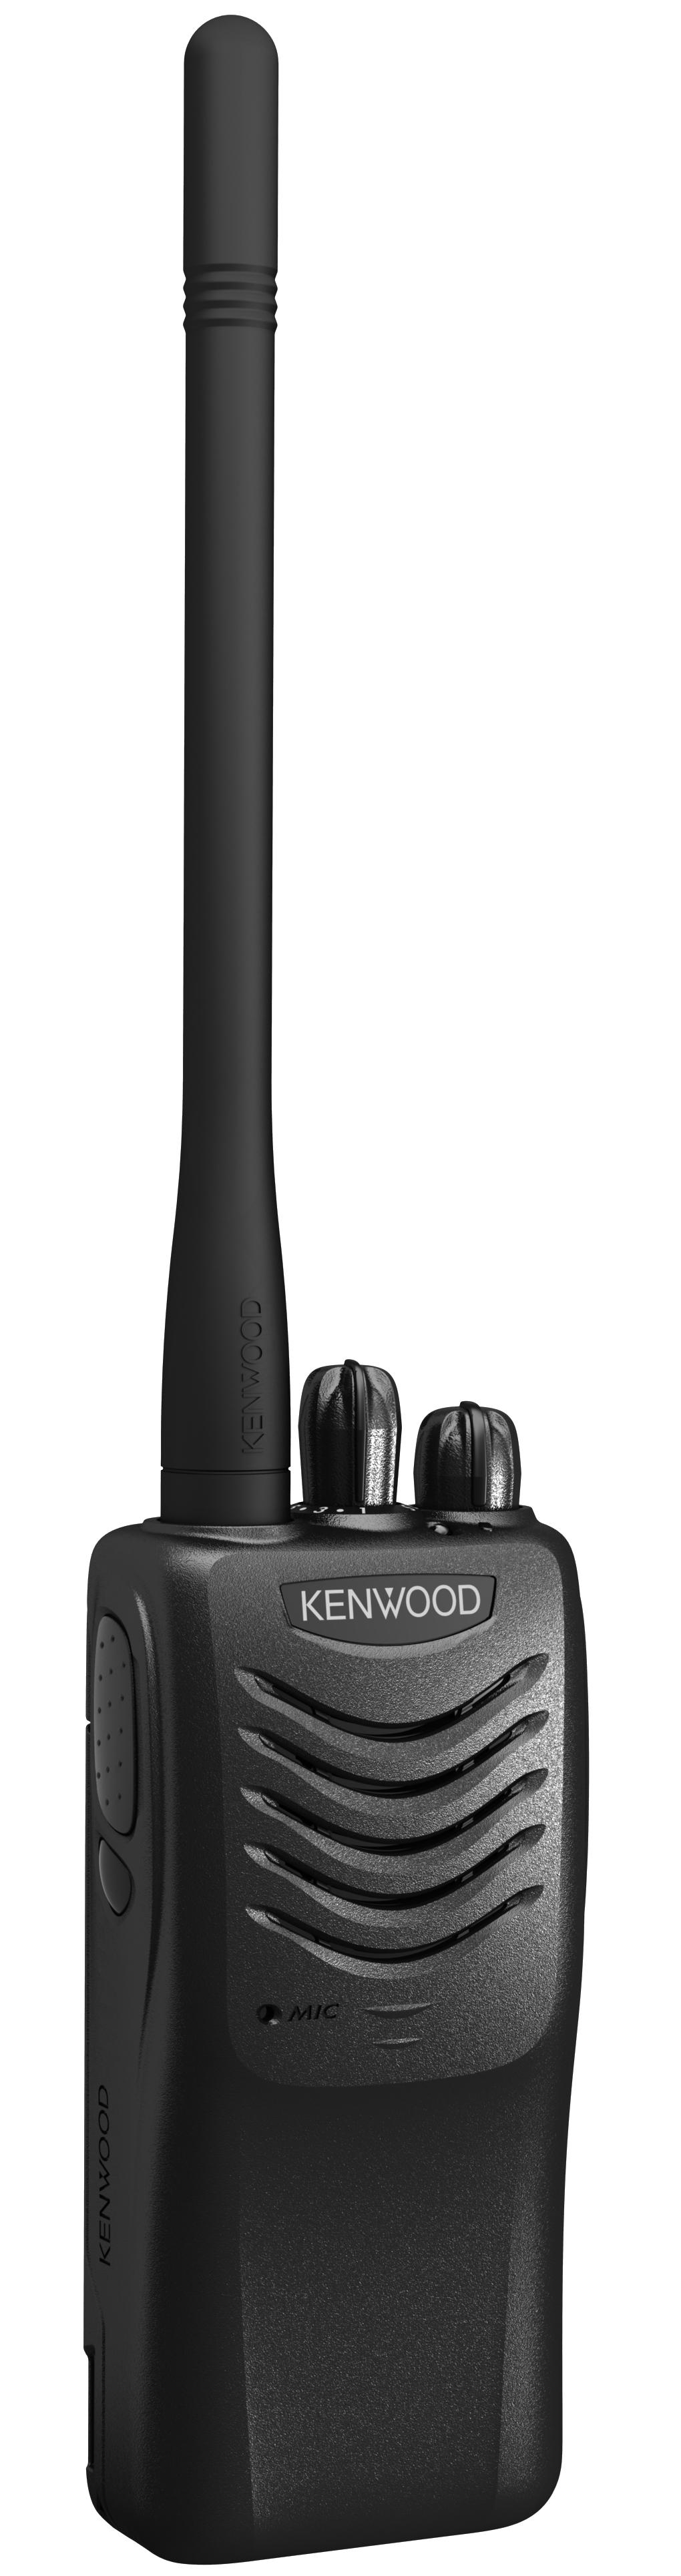 Kenwood Handheld Portable Radios